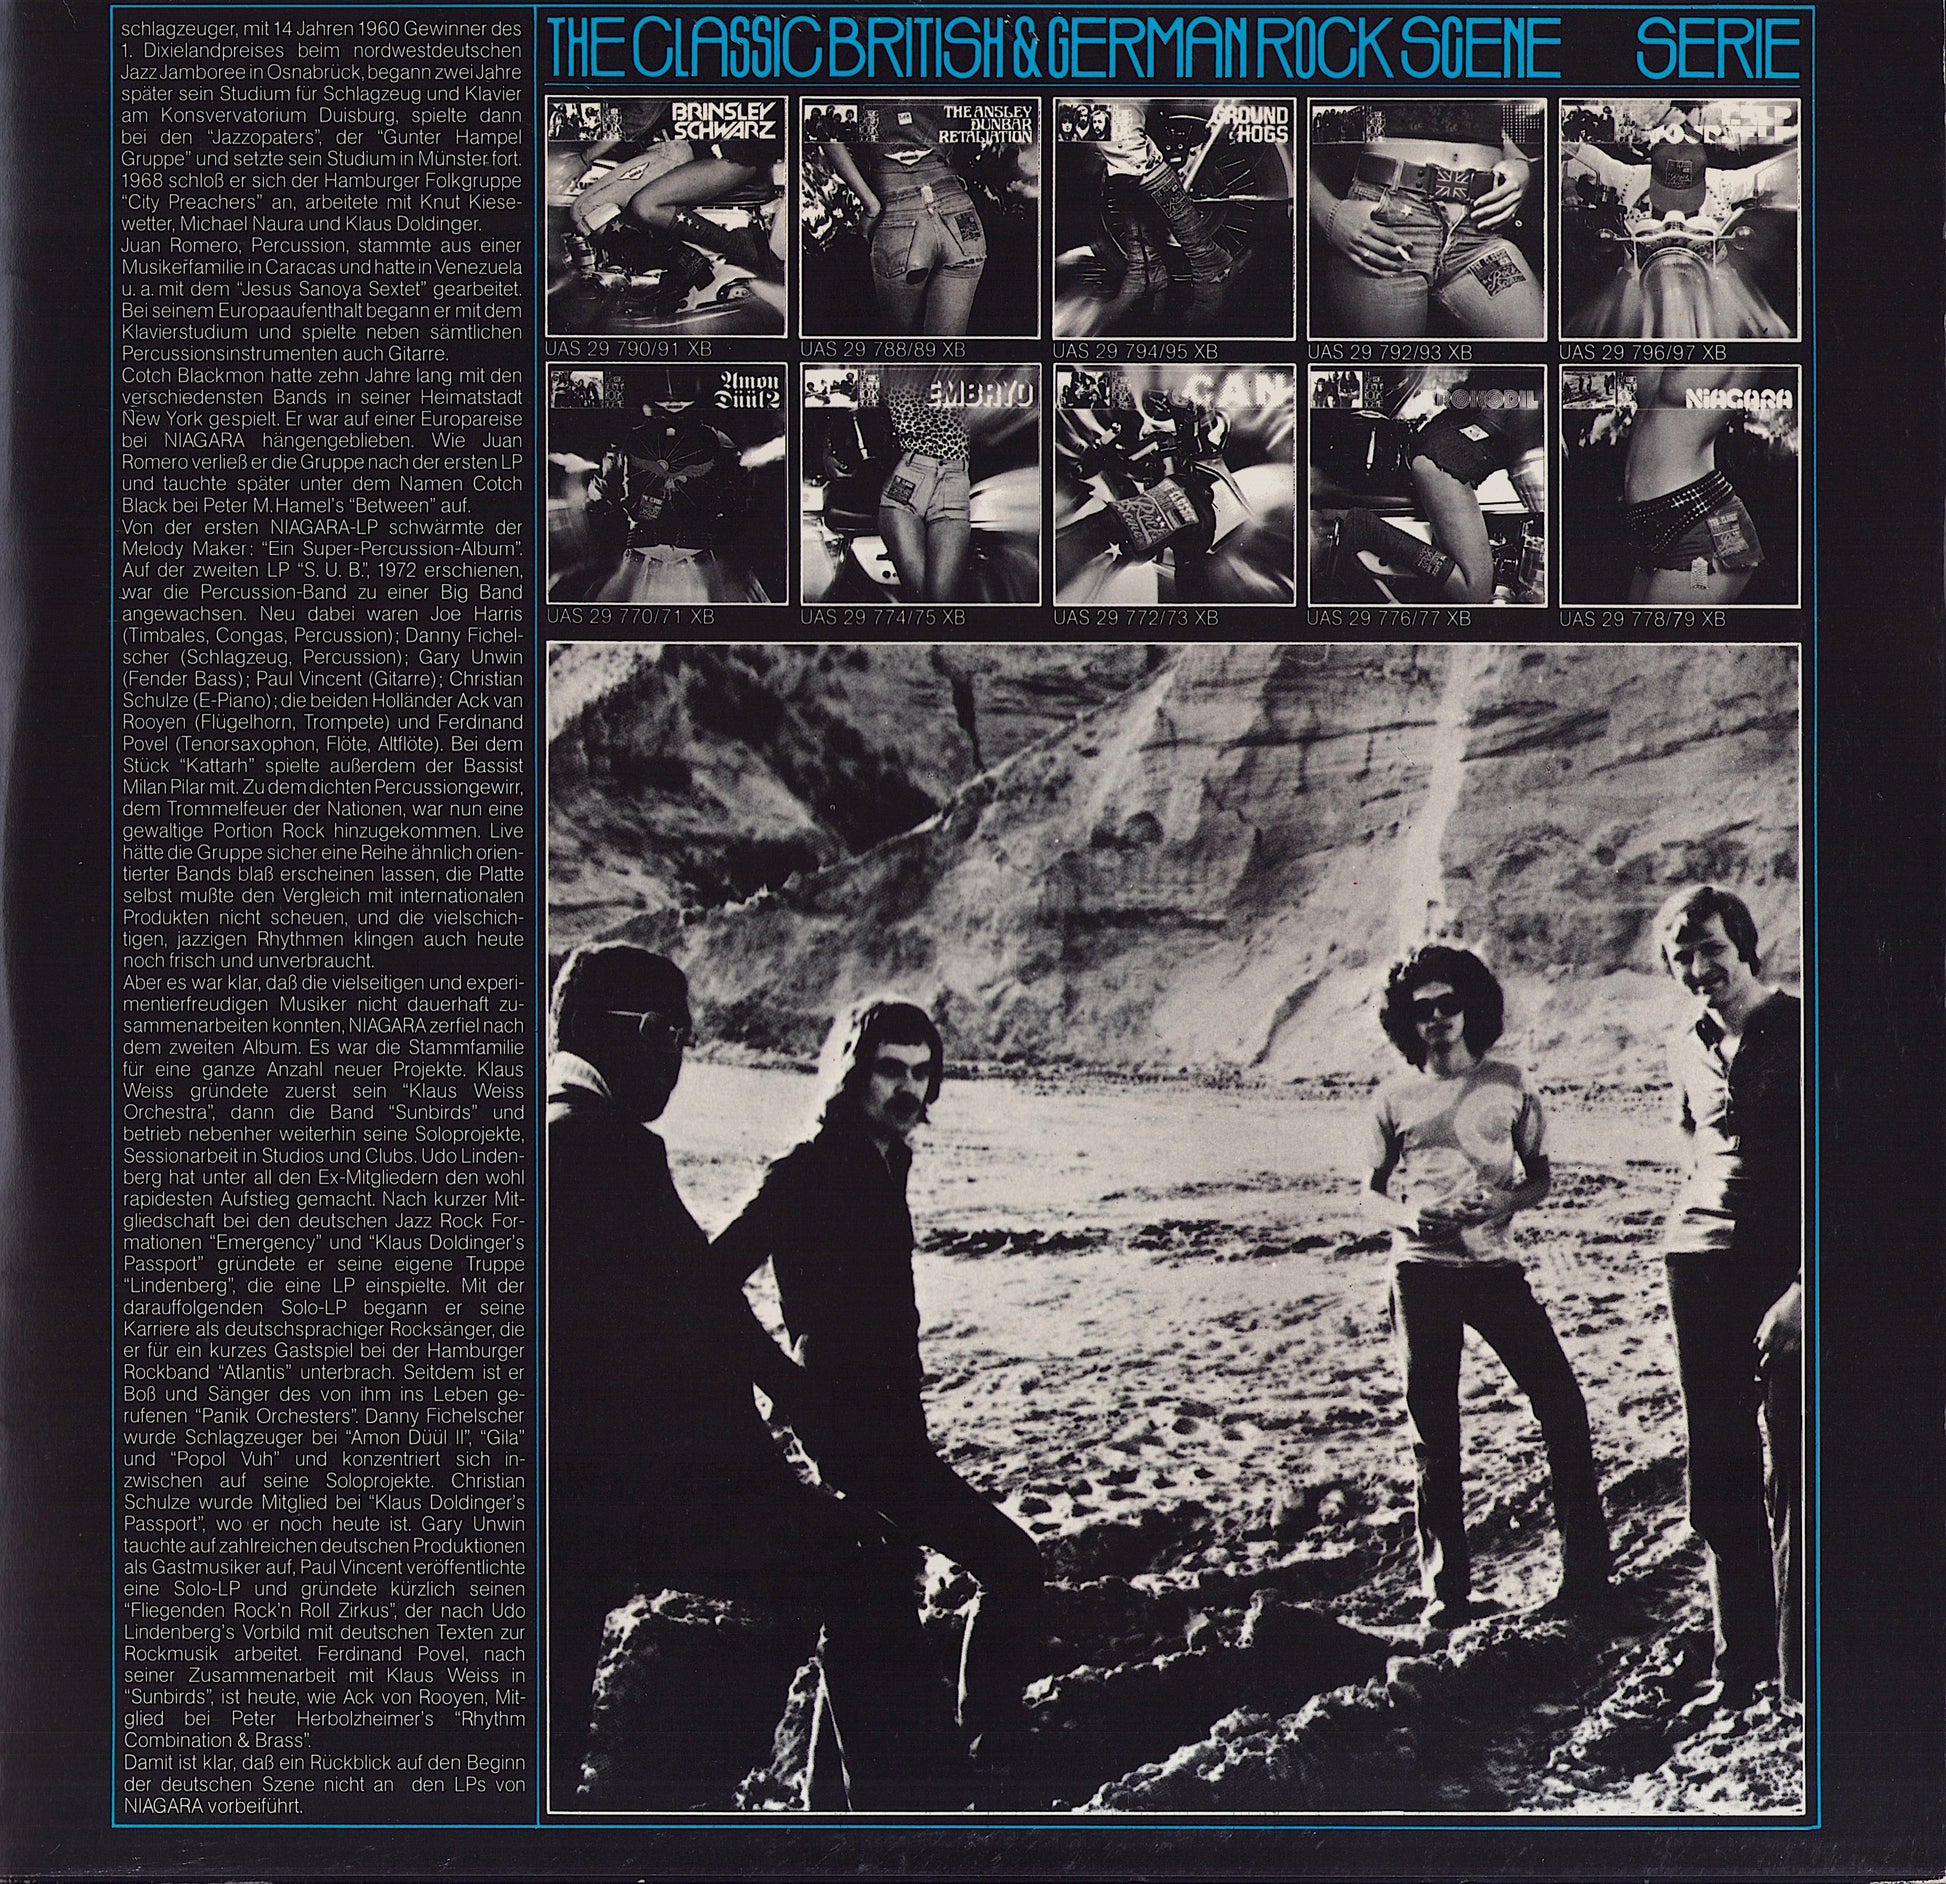 Niagara - The Classic German Rock Scene Vinyl 2LP